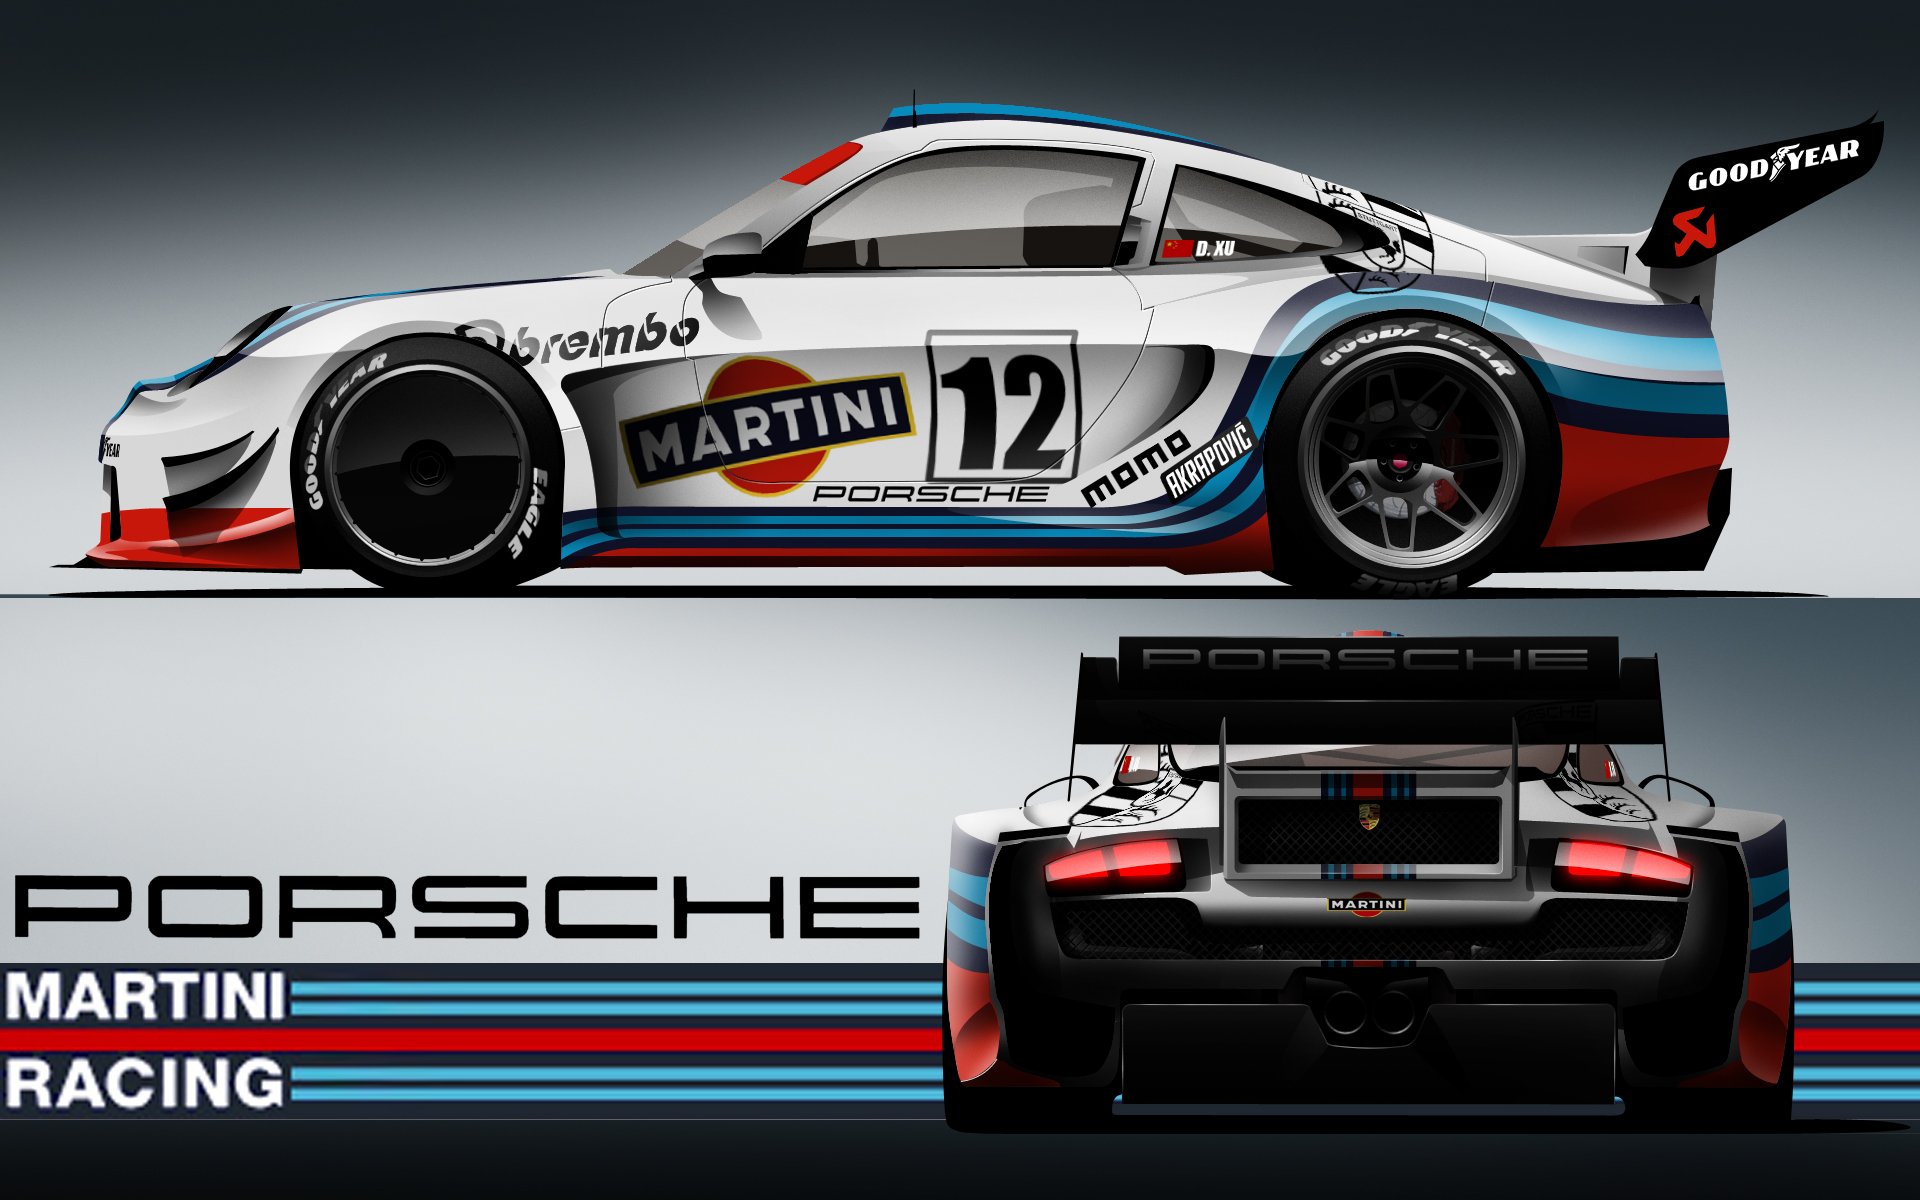 martini, Racing, Porsche Wallpaper HD / Desktop and Mobile Background